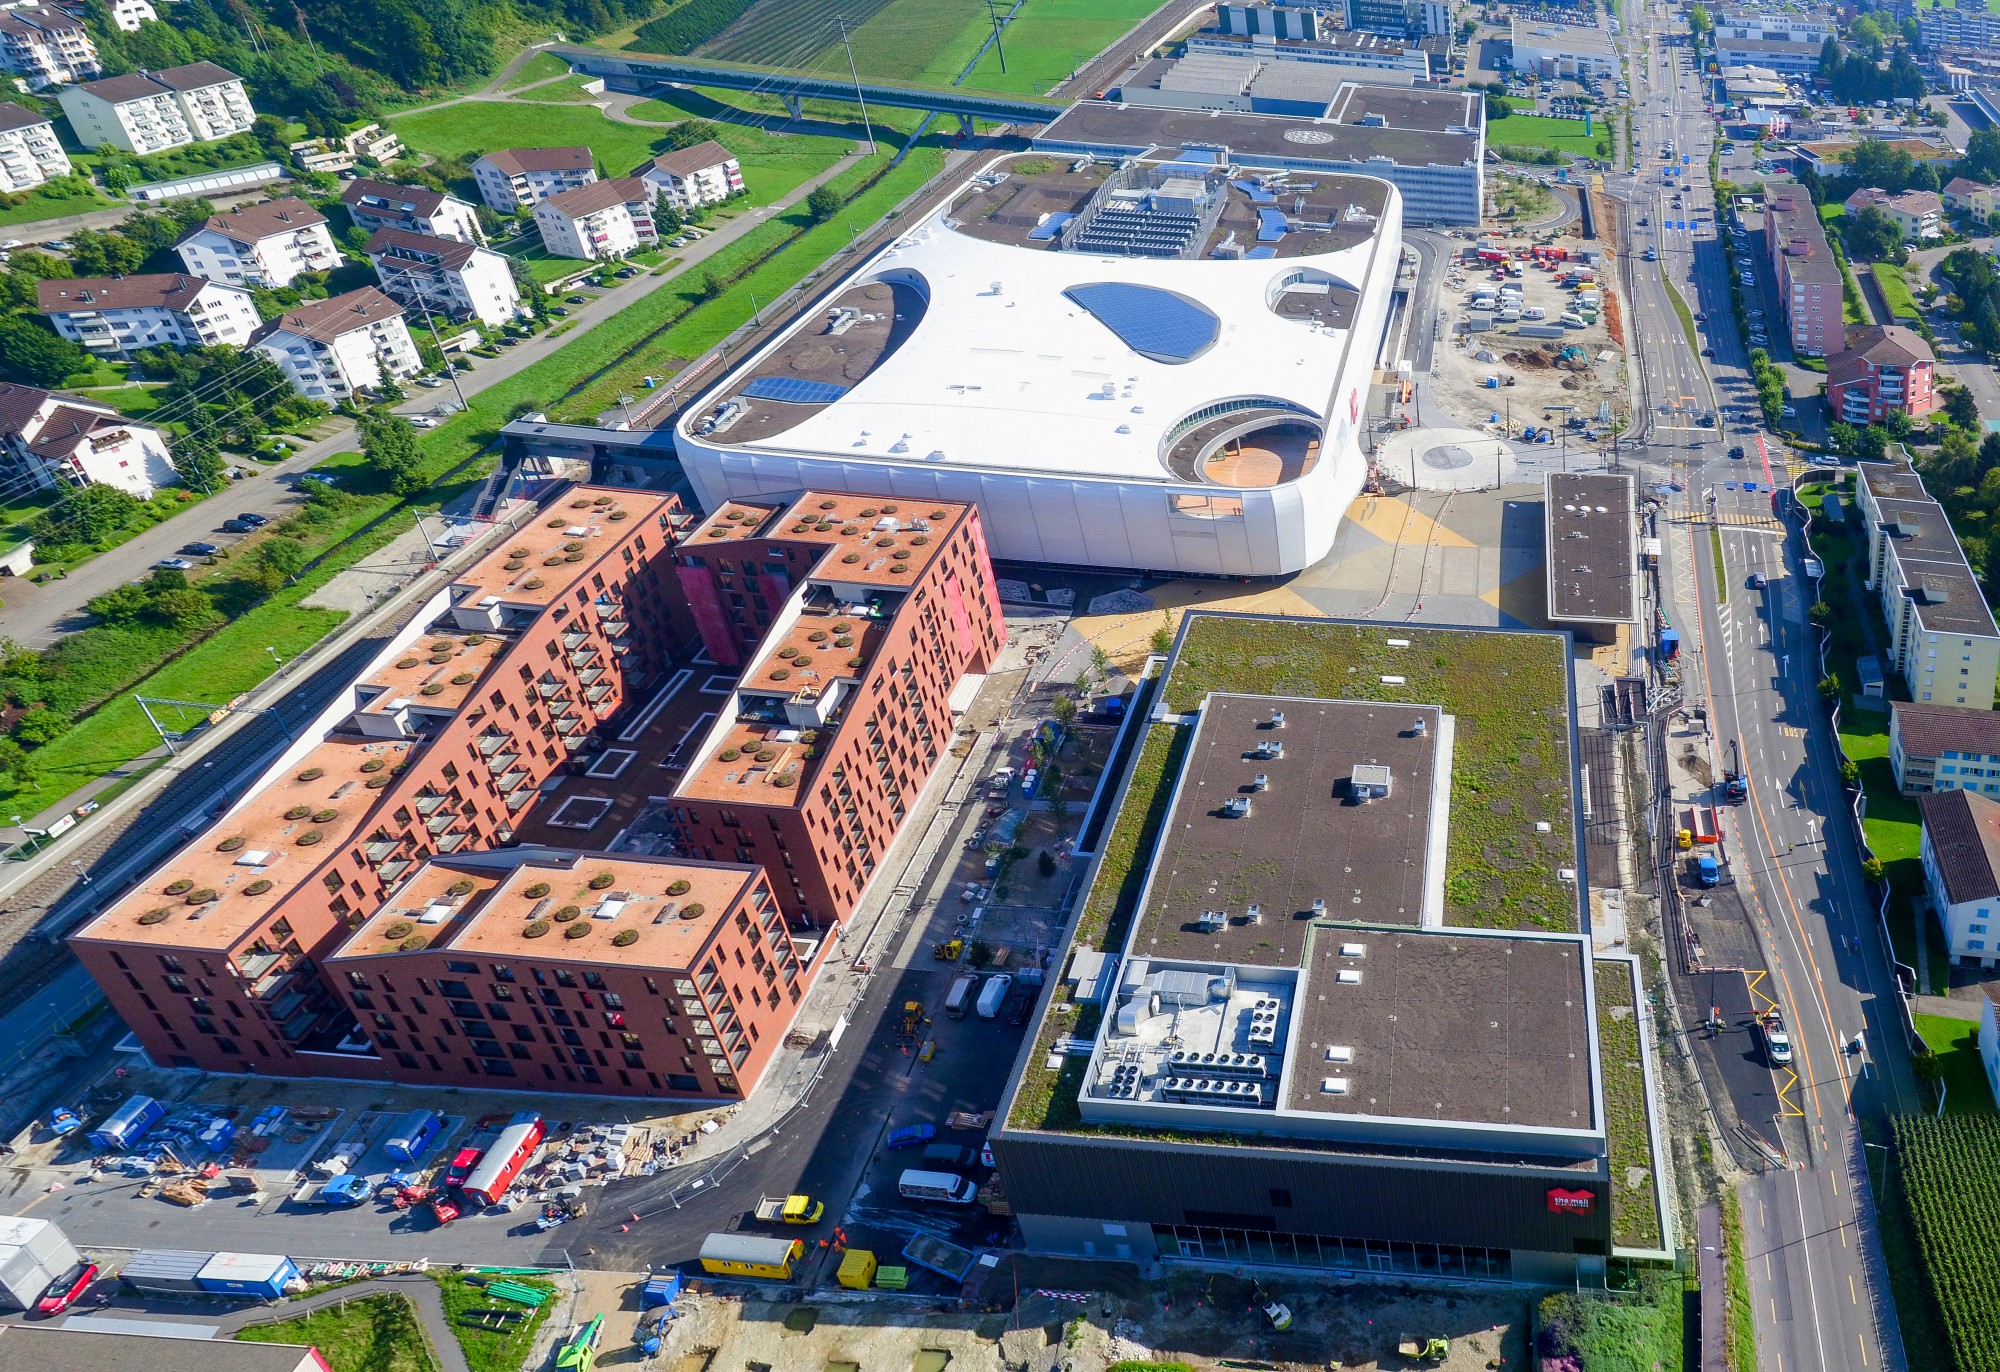 Mall of Switzerland Drone